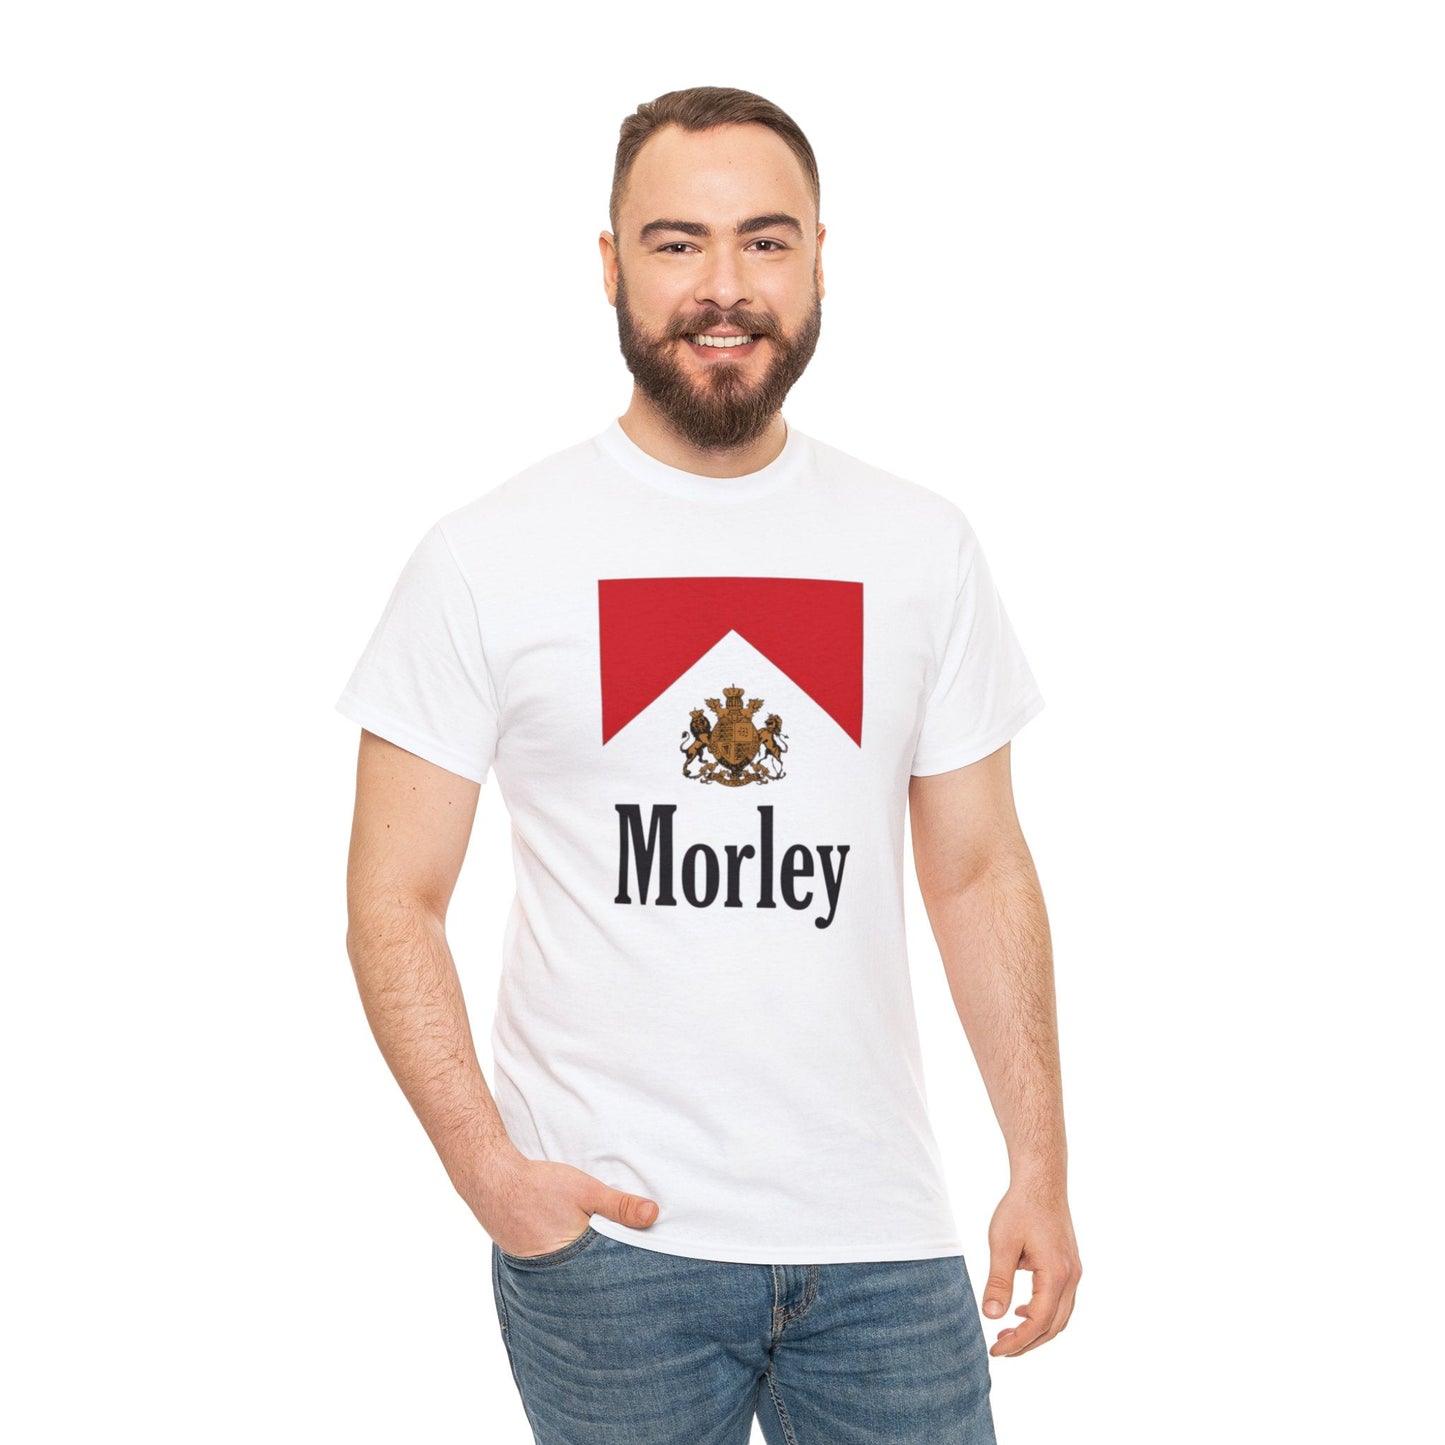 Morley Cigarettes Logo T-Shirt - Fictional Brand- X Files & Breaking Bad